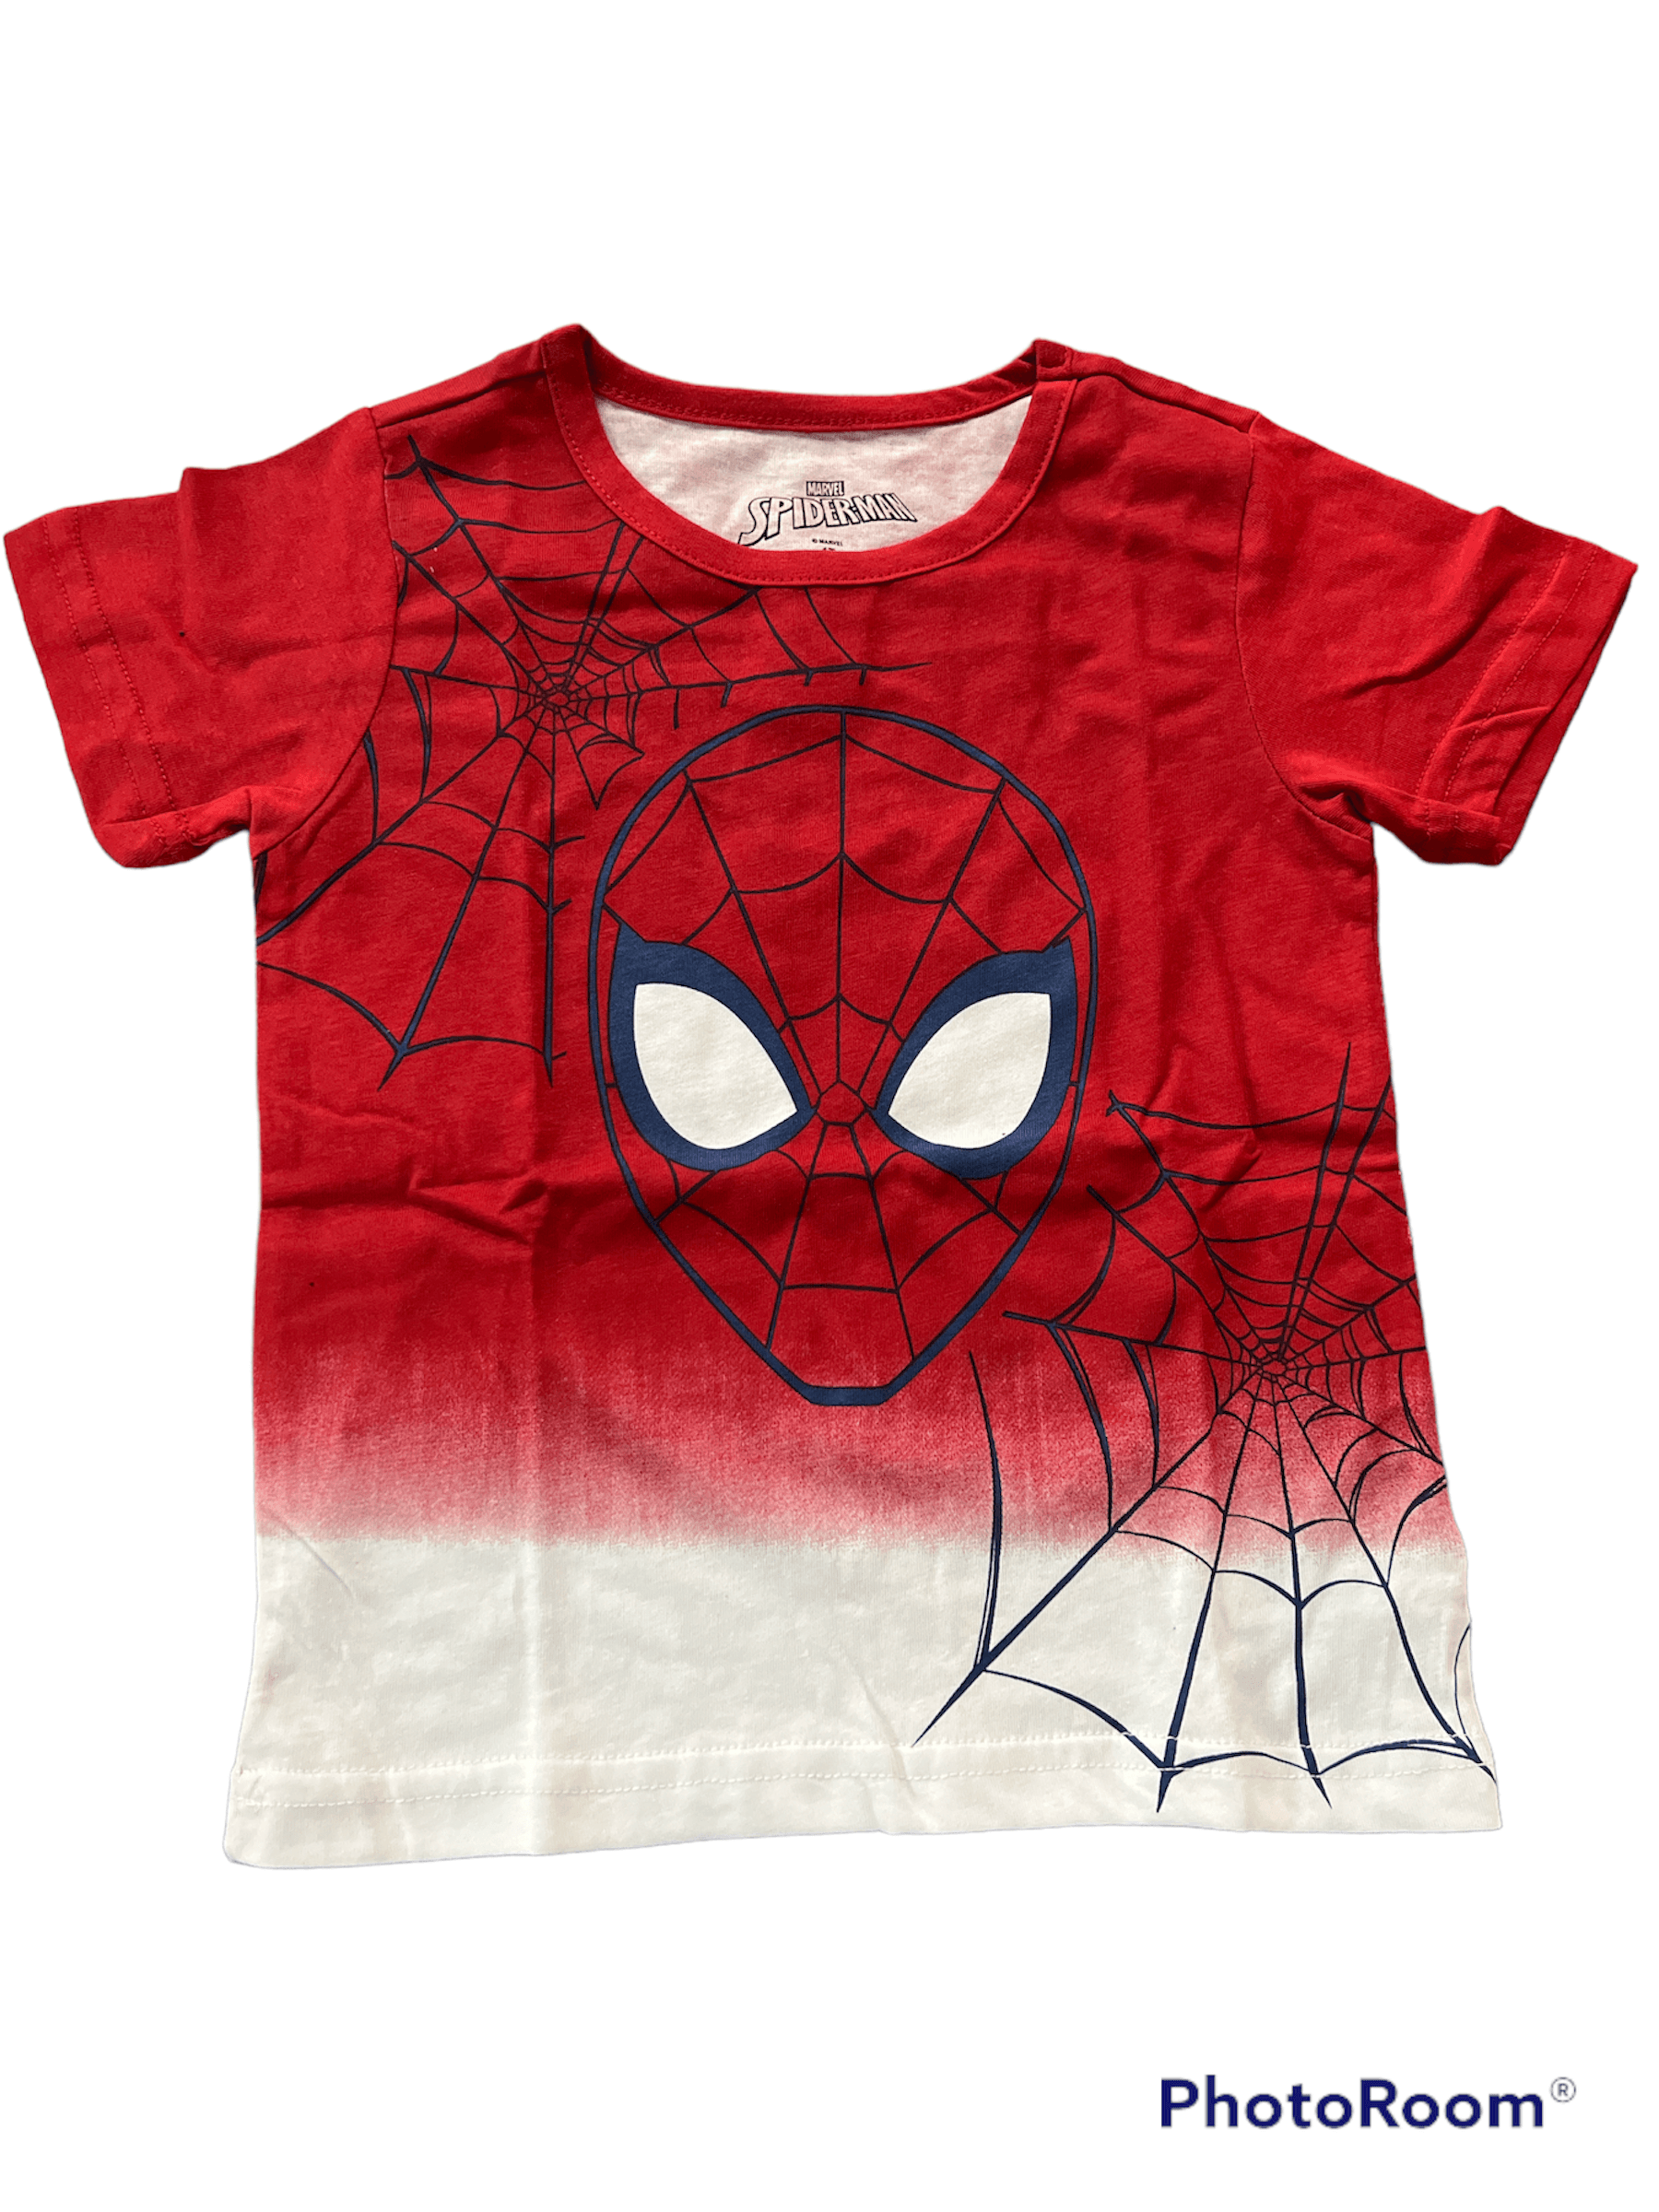 Toddler Spiderman Red Shirt